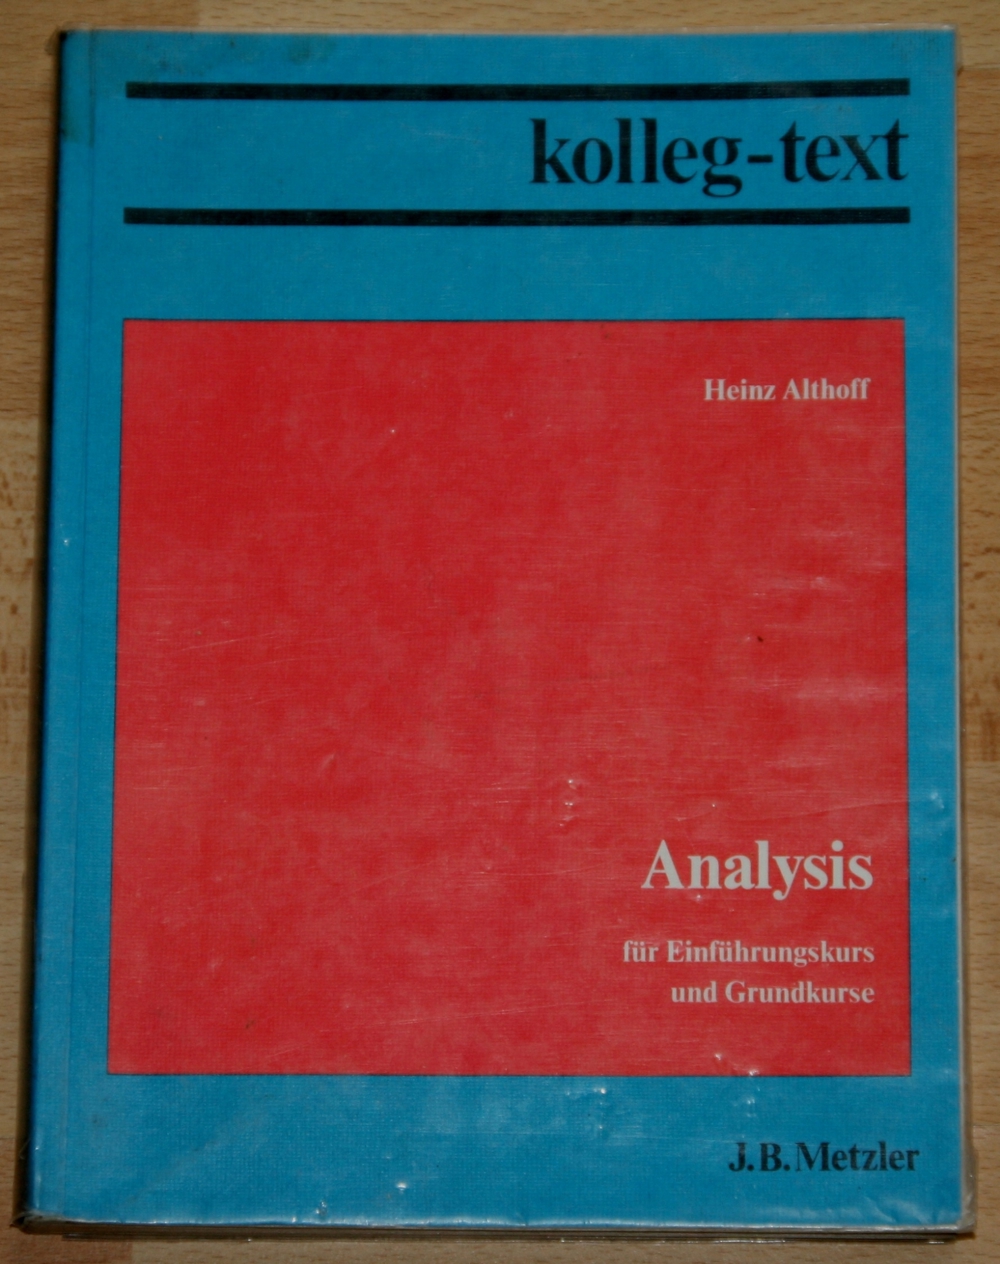 Buch "Analysis" - Mathematik - Nachhilfe - Oberstufe Gymnasium